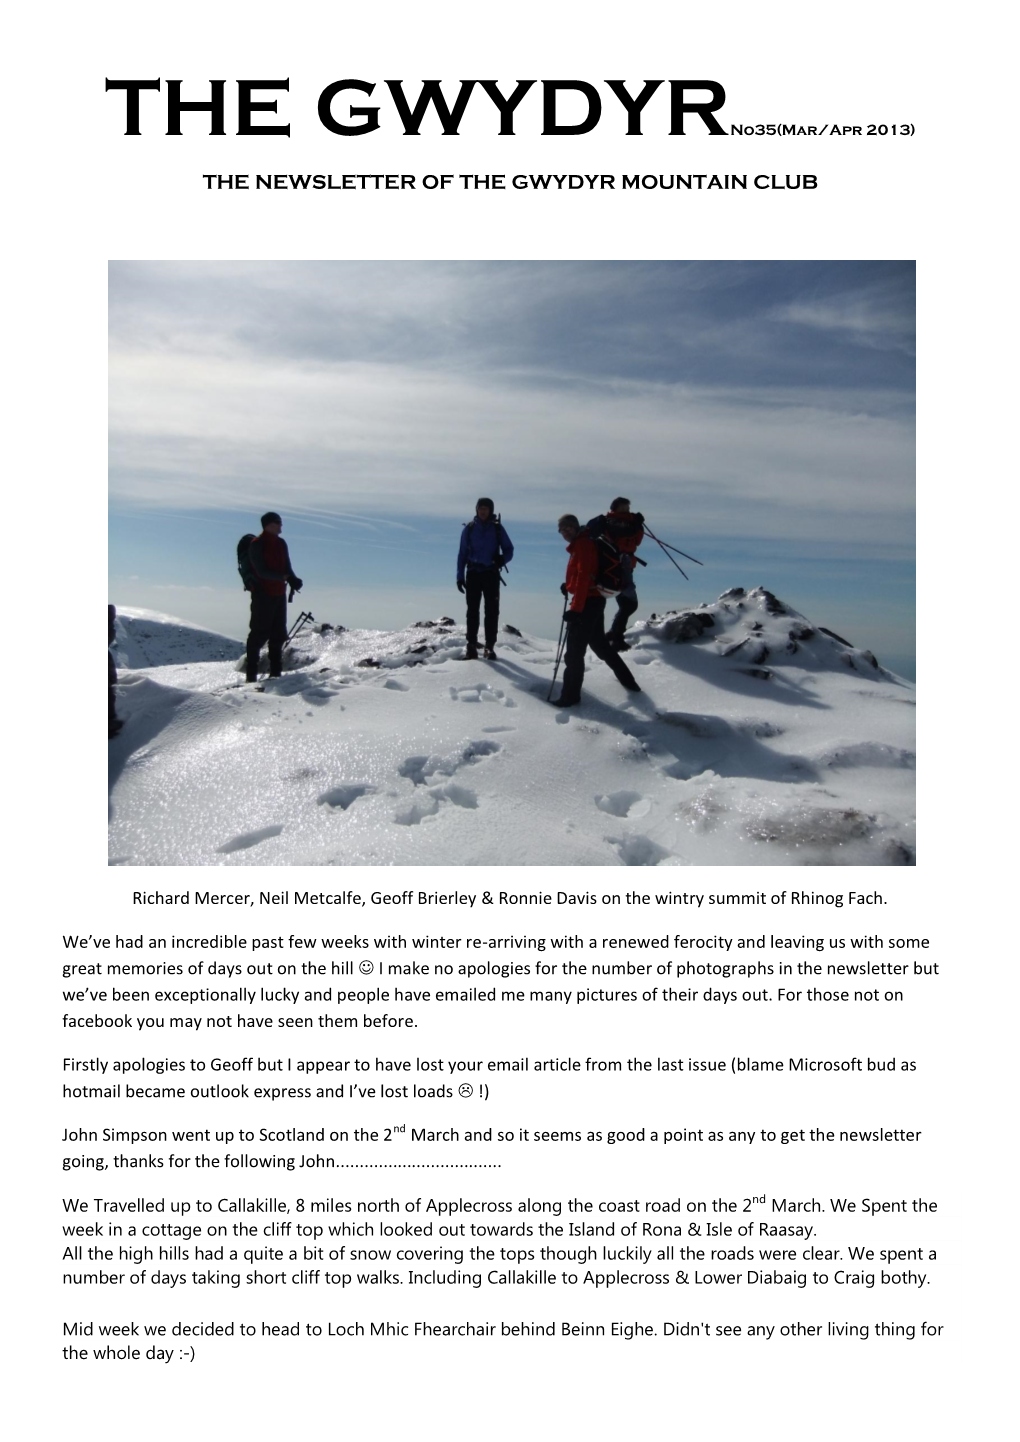 The Newsletter of the Gwydyr Mountain Club